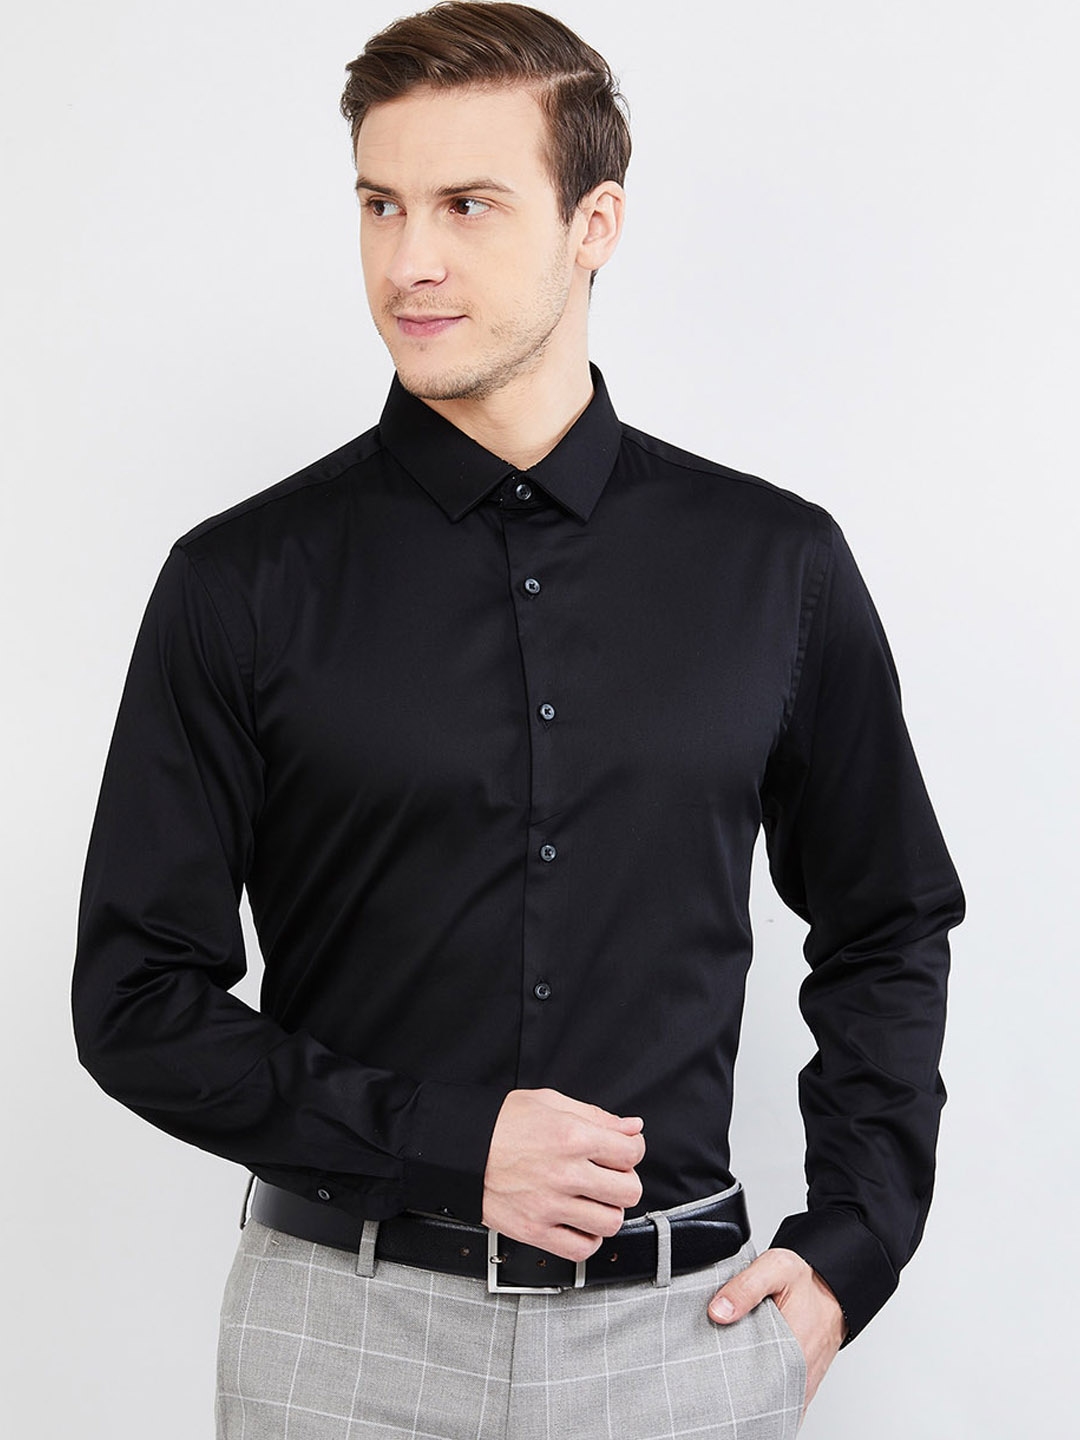 Buy Max Men Black Slim Fit Solid Formal Shirt - Shirts for Men 12644618 ...